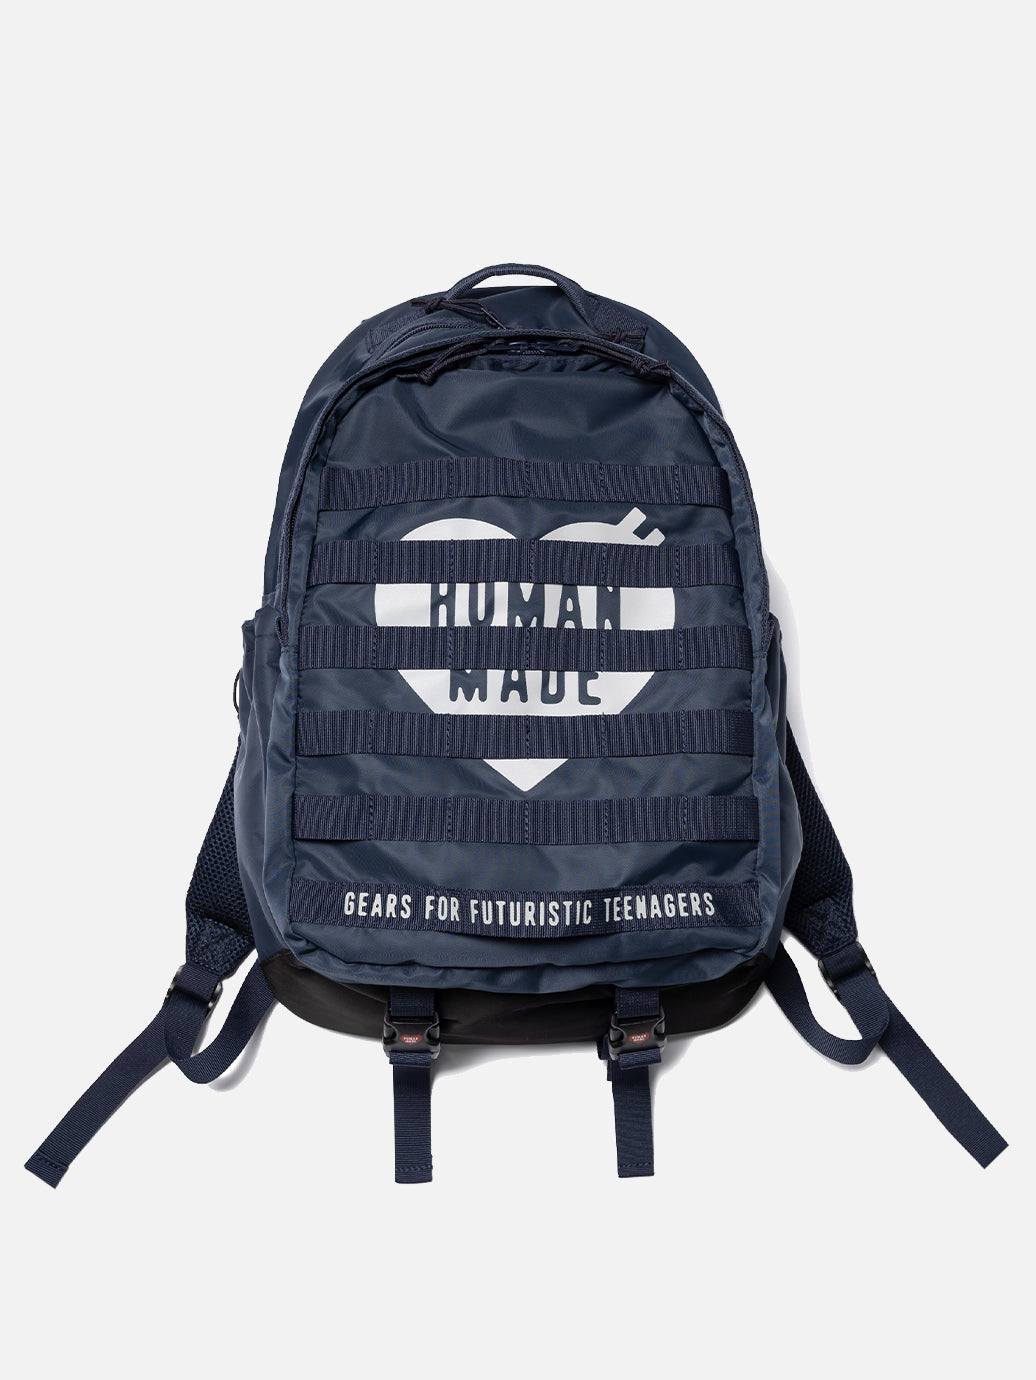 Human Made Military Backpack